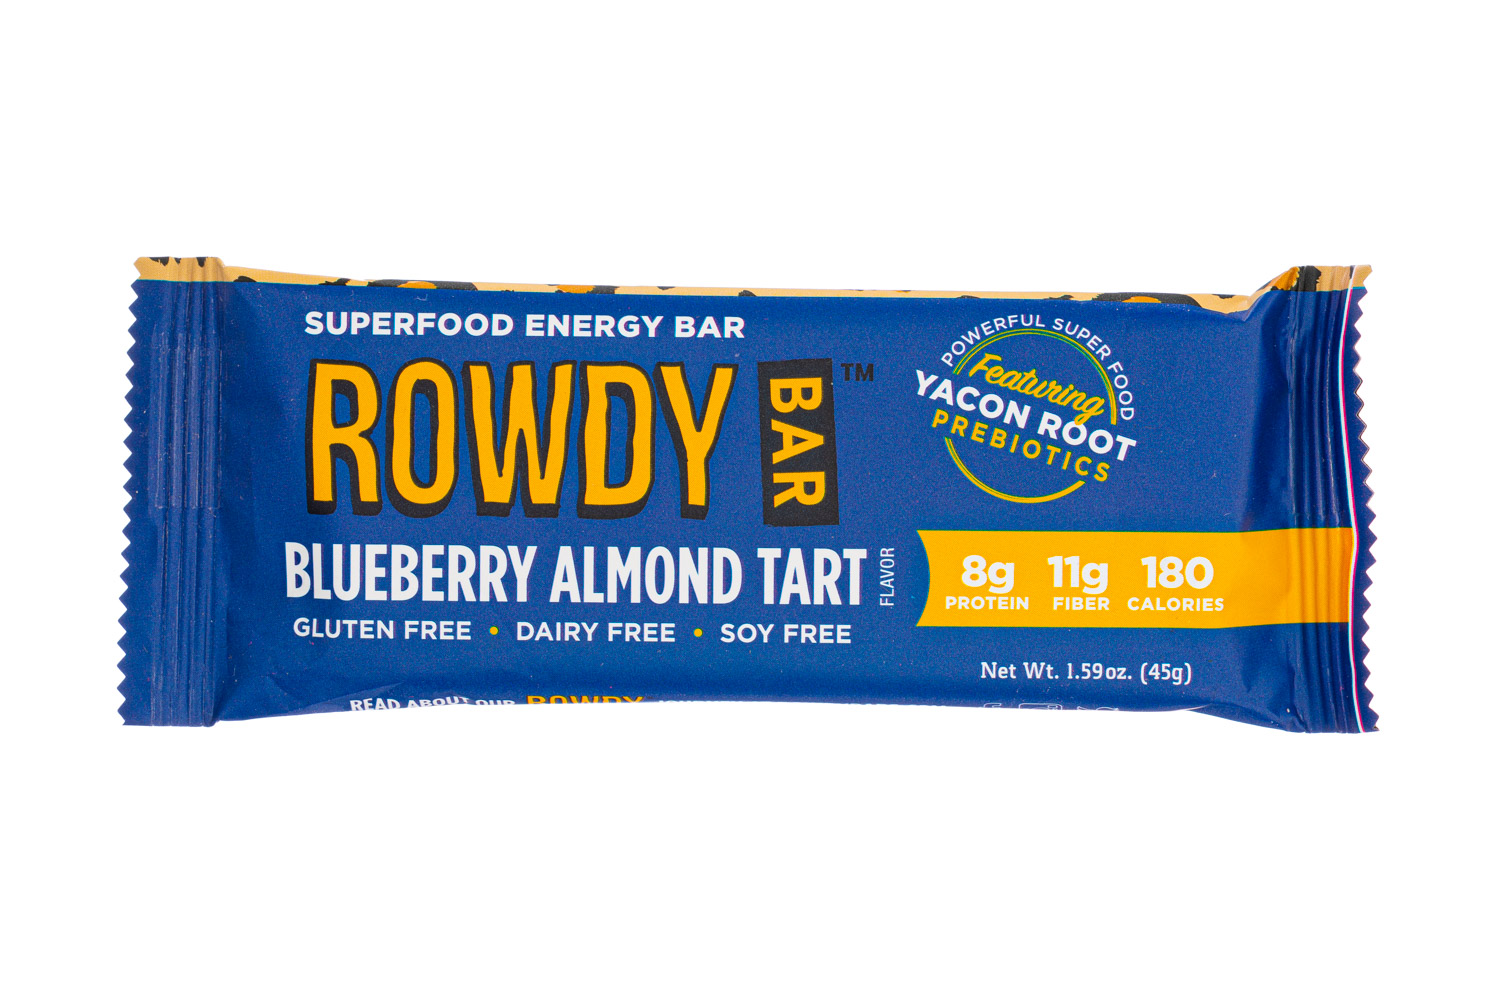 Blueberry Almond Tart